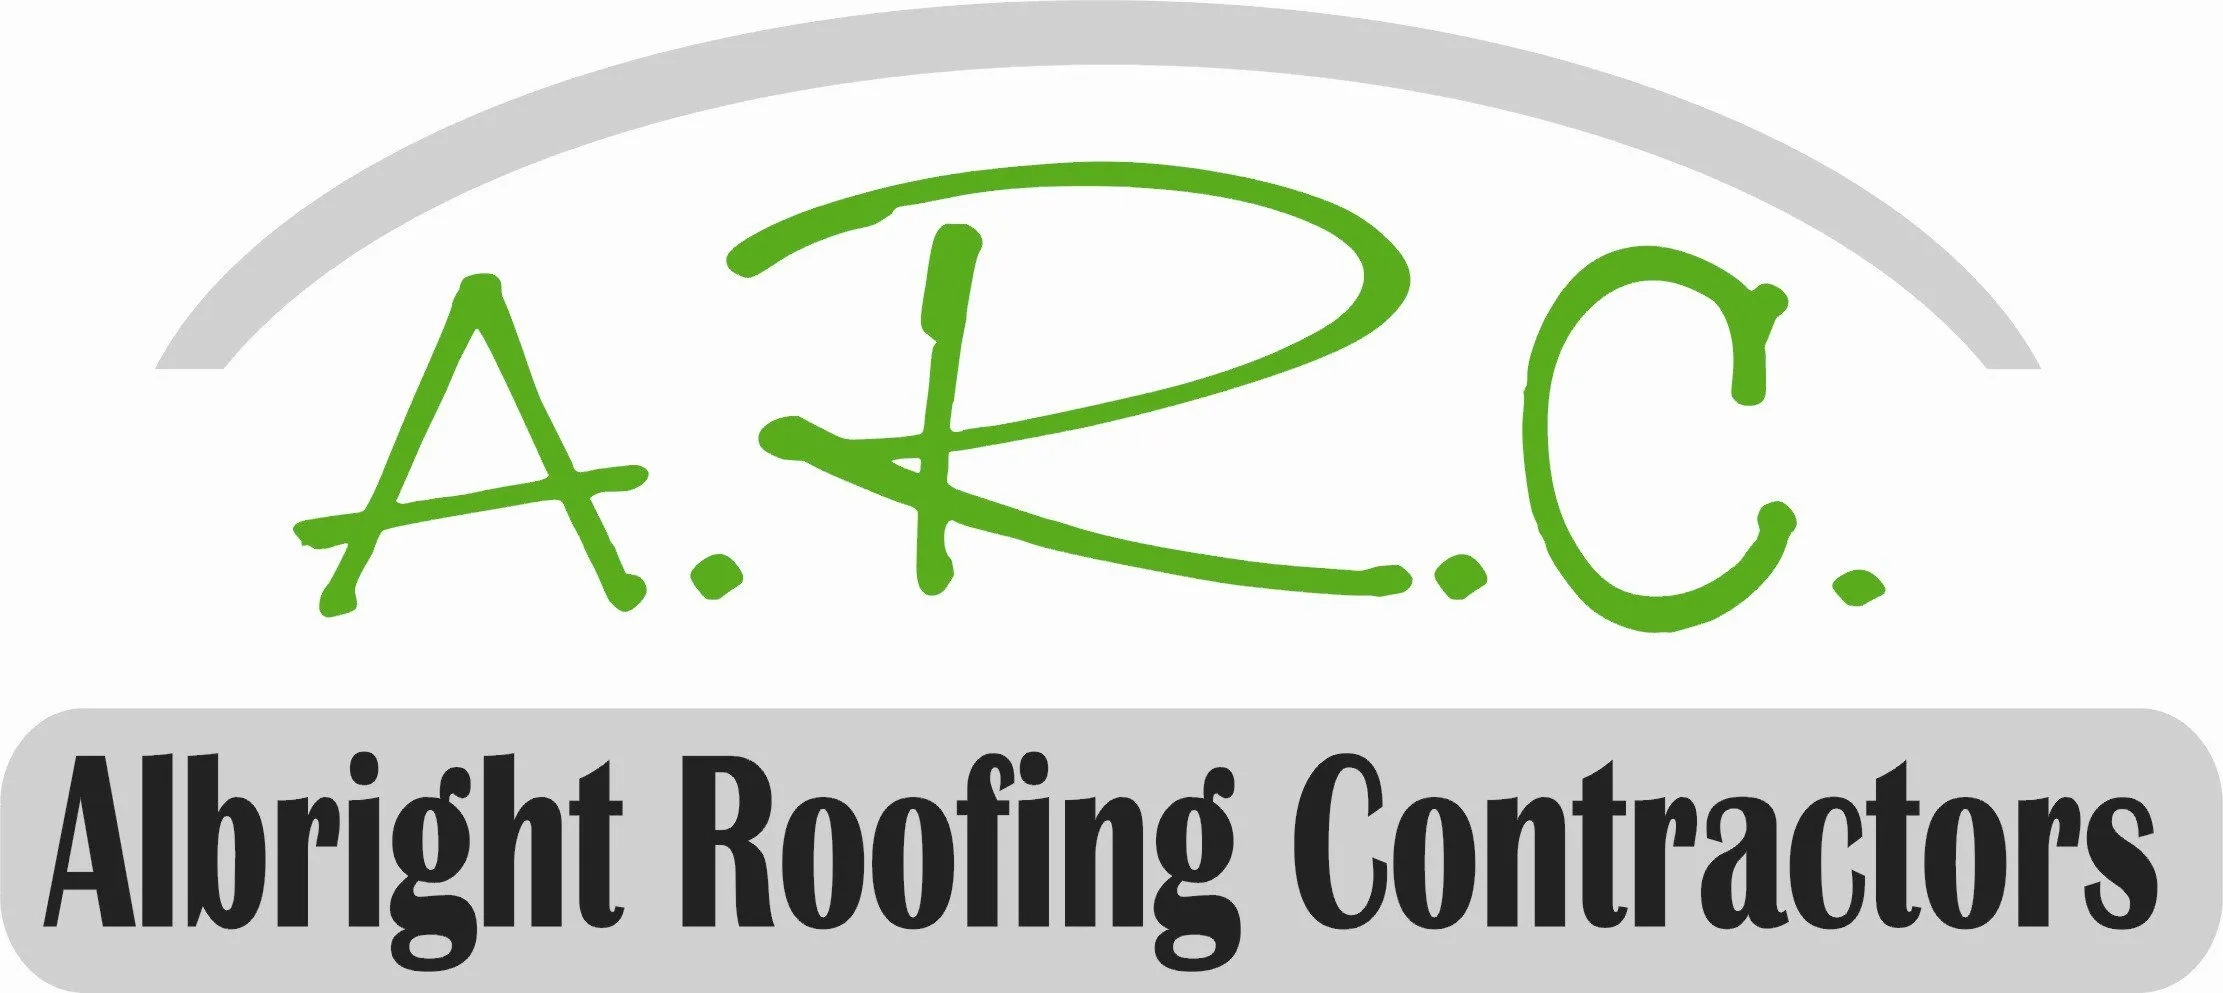 Albright Roofing Contractors Logo